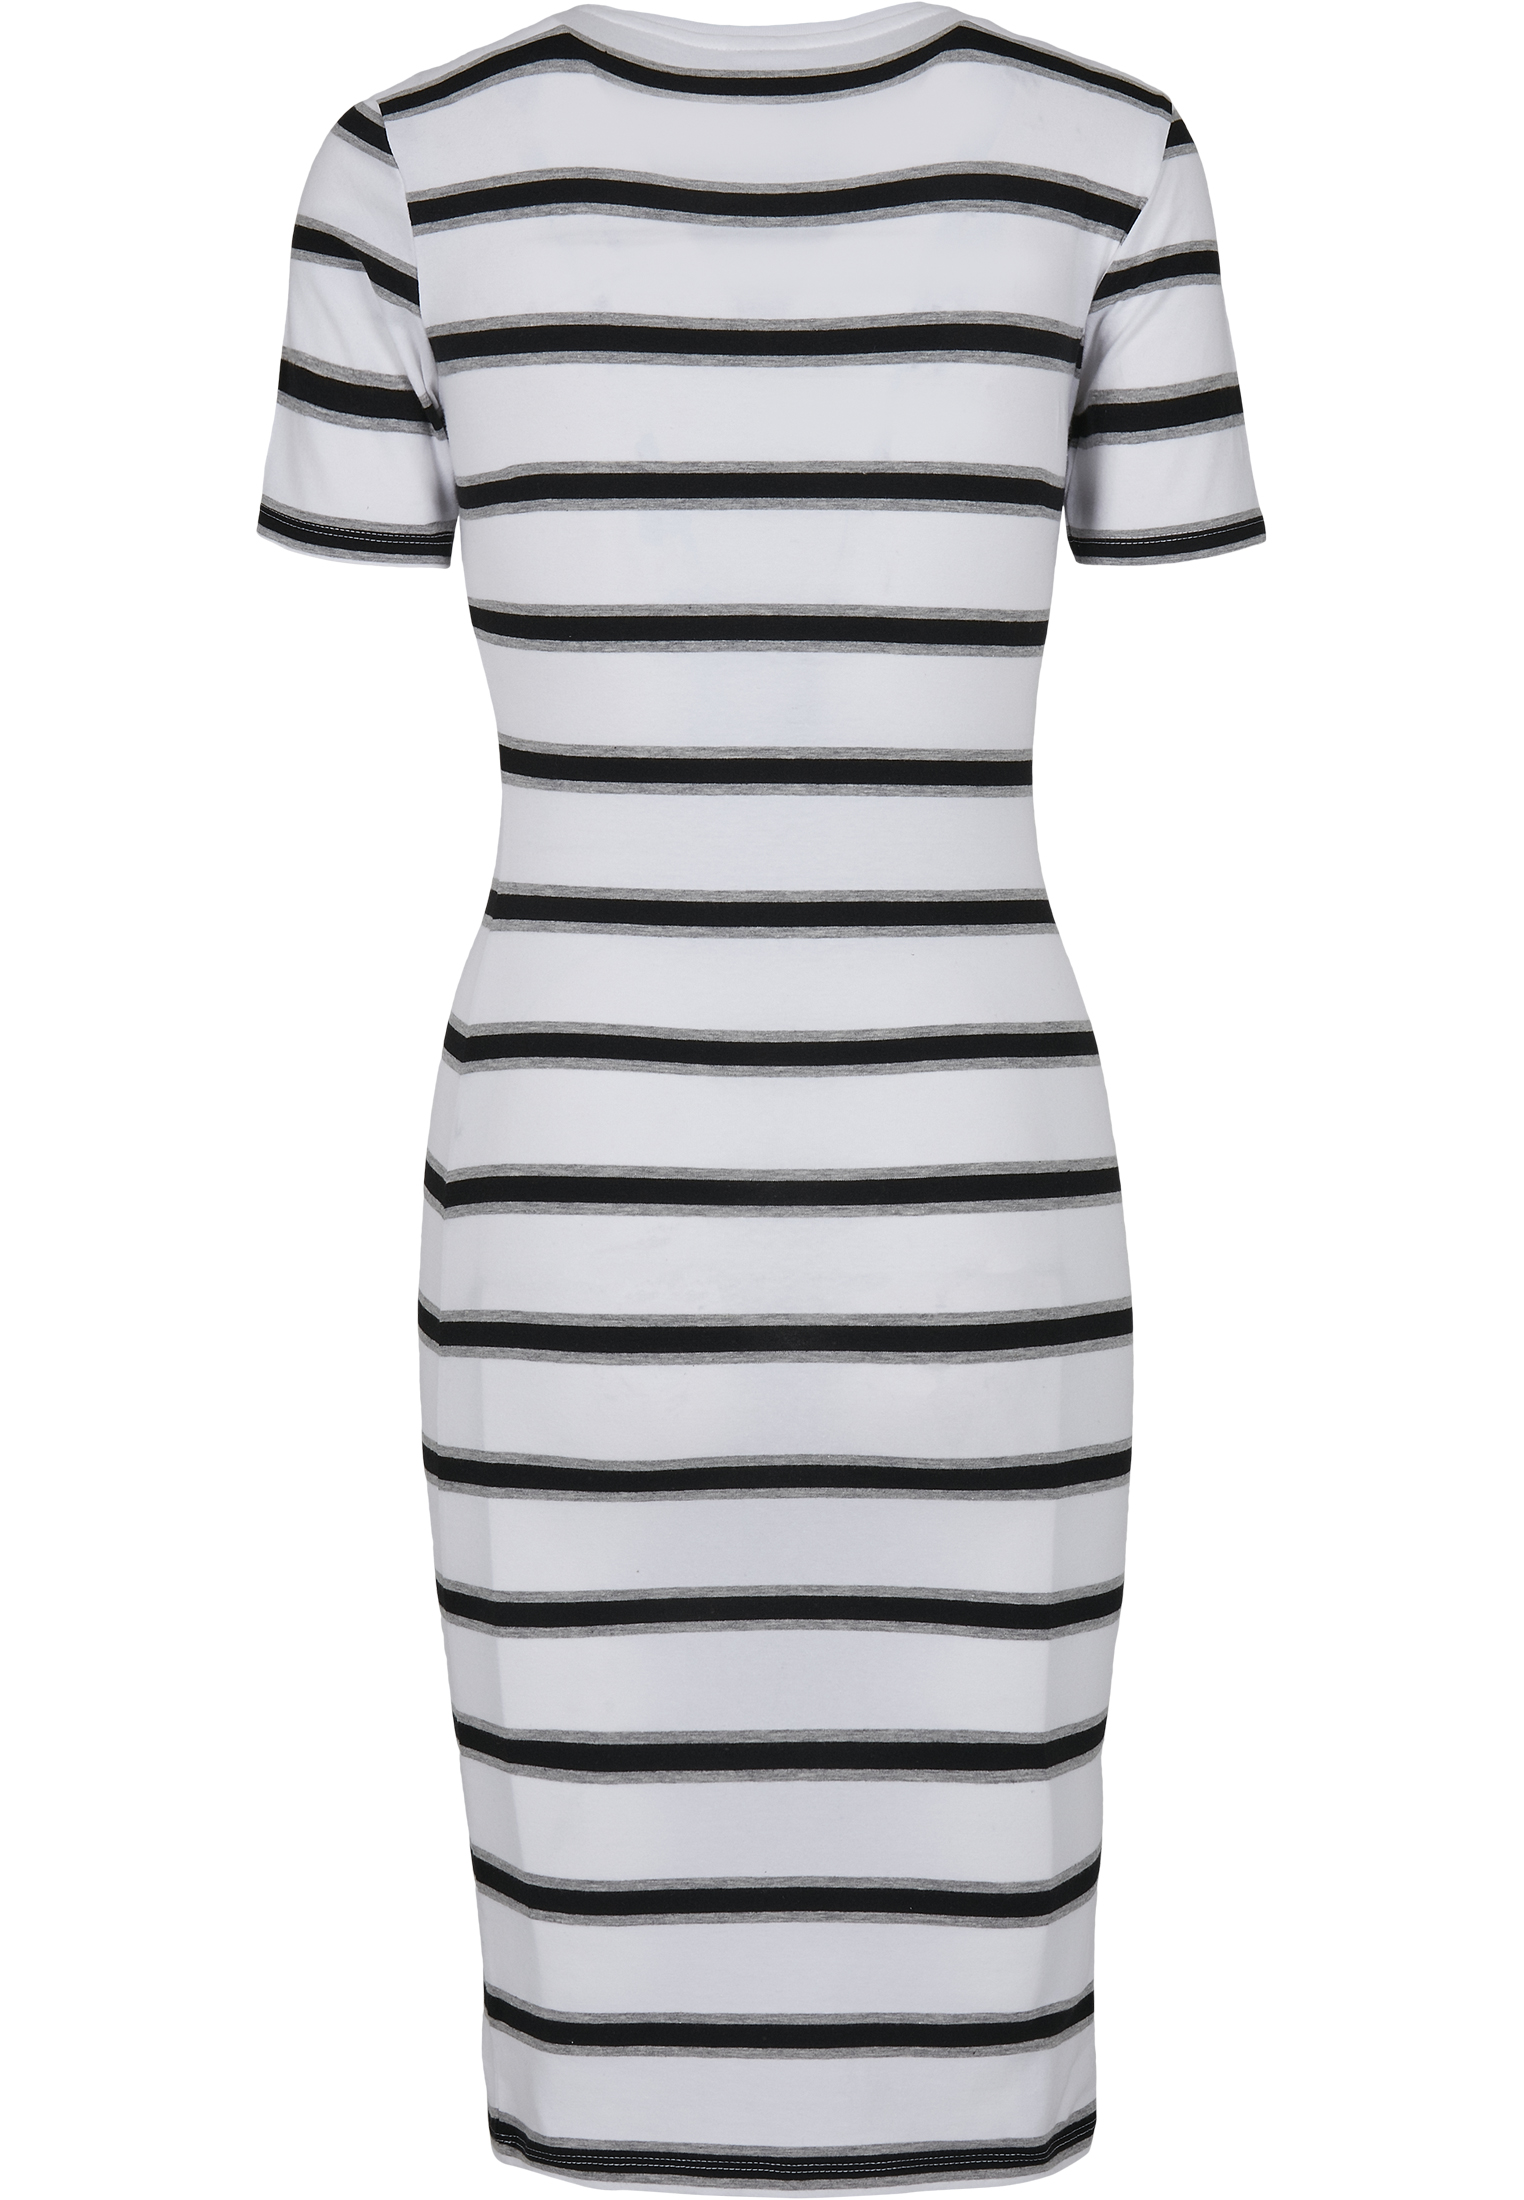 Kleider & R?cke Ladies Stretch Stripe Dress in Farbe white/black